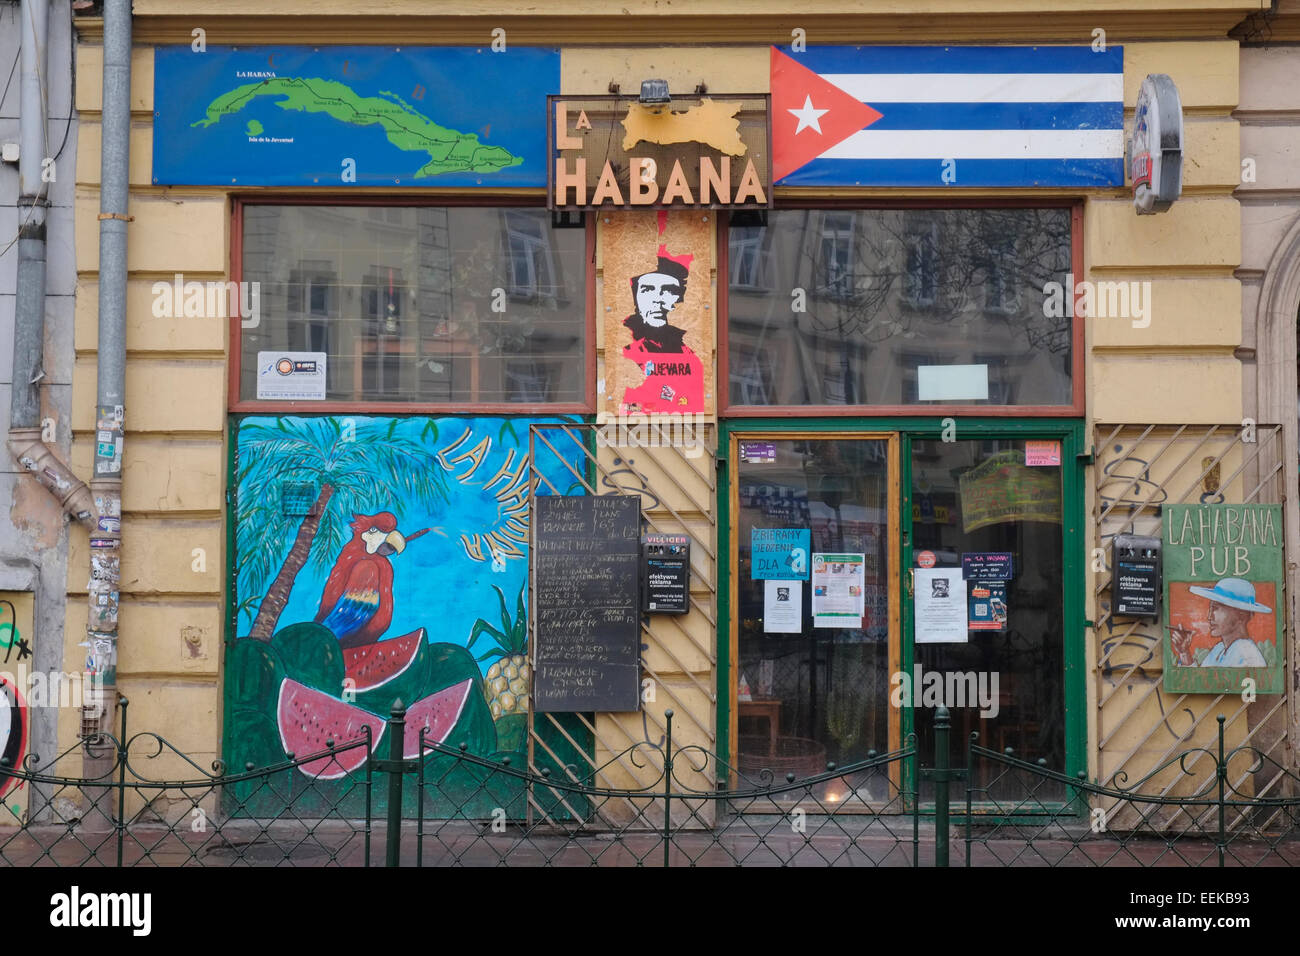 La Habana Pub, Kazimierz, Krakow, Poland. Stock Photo